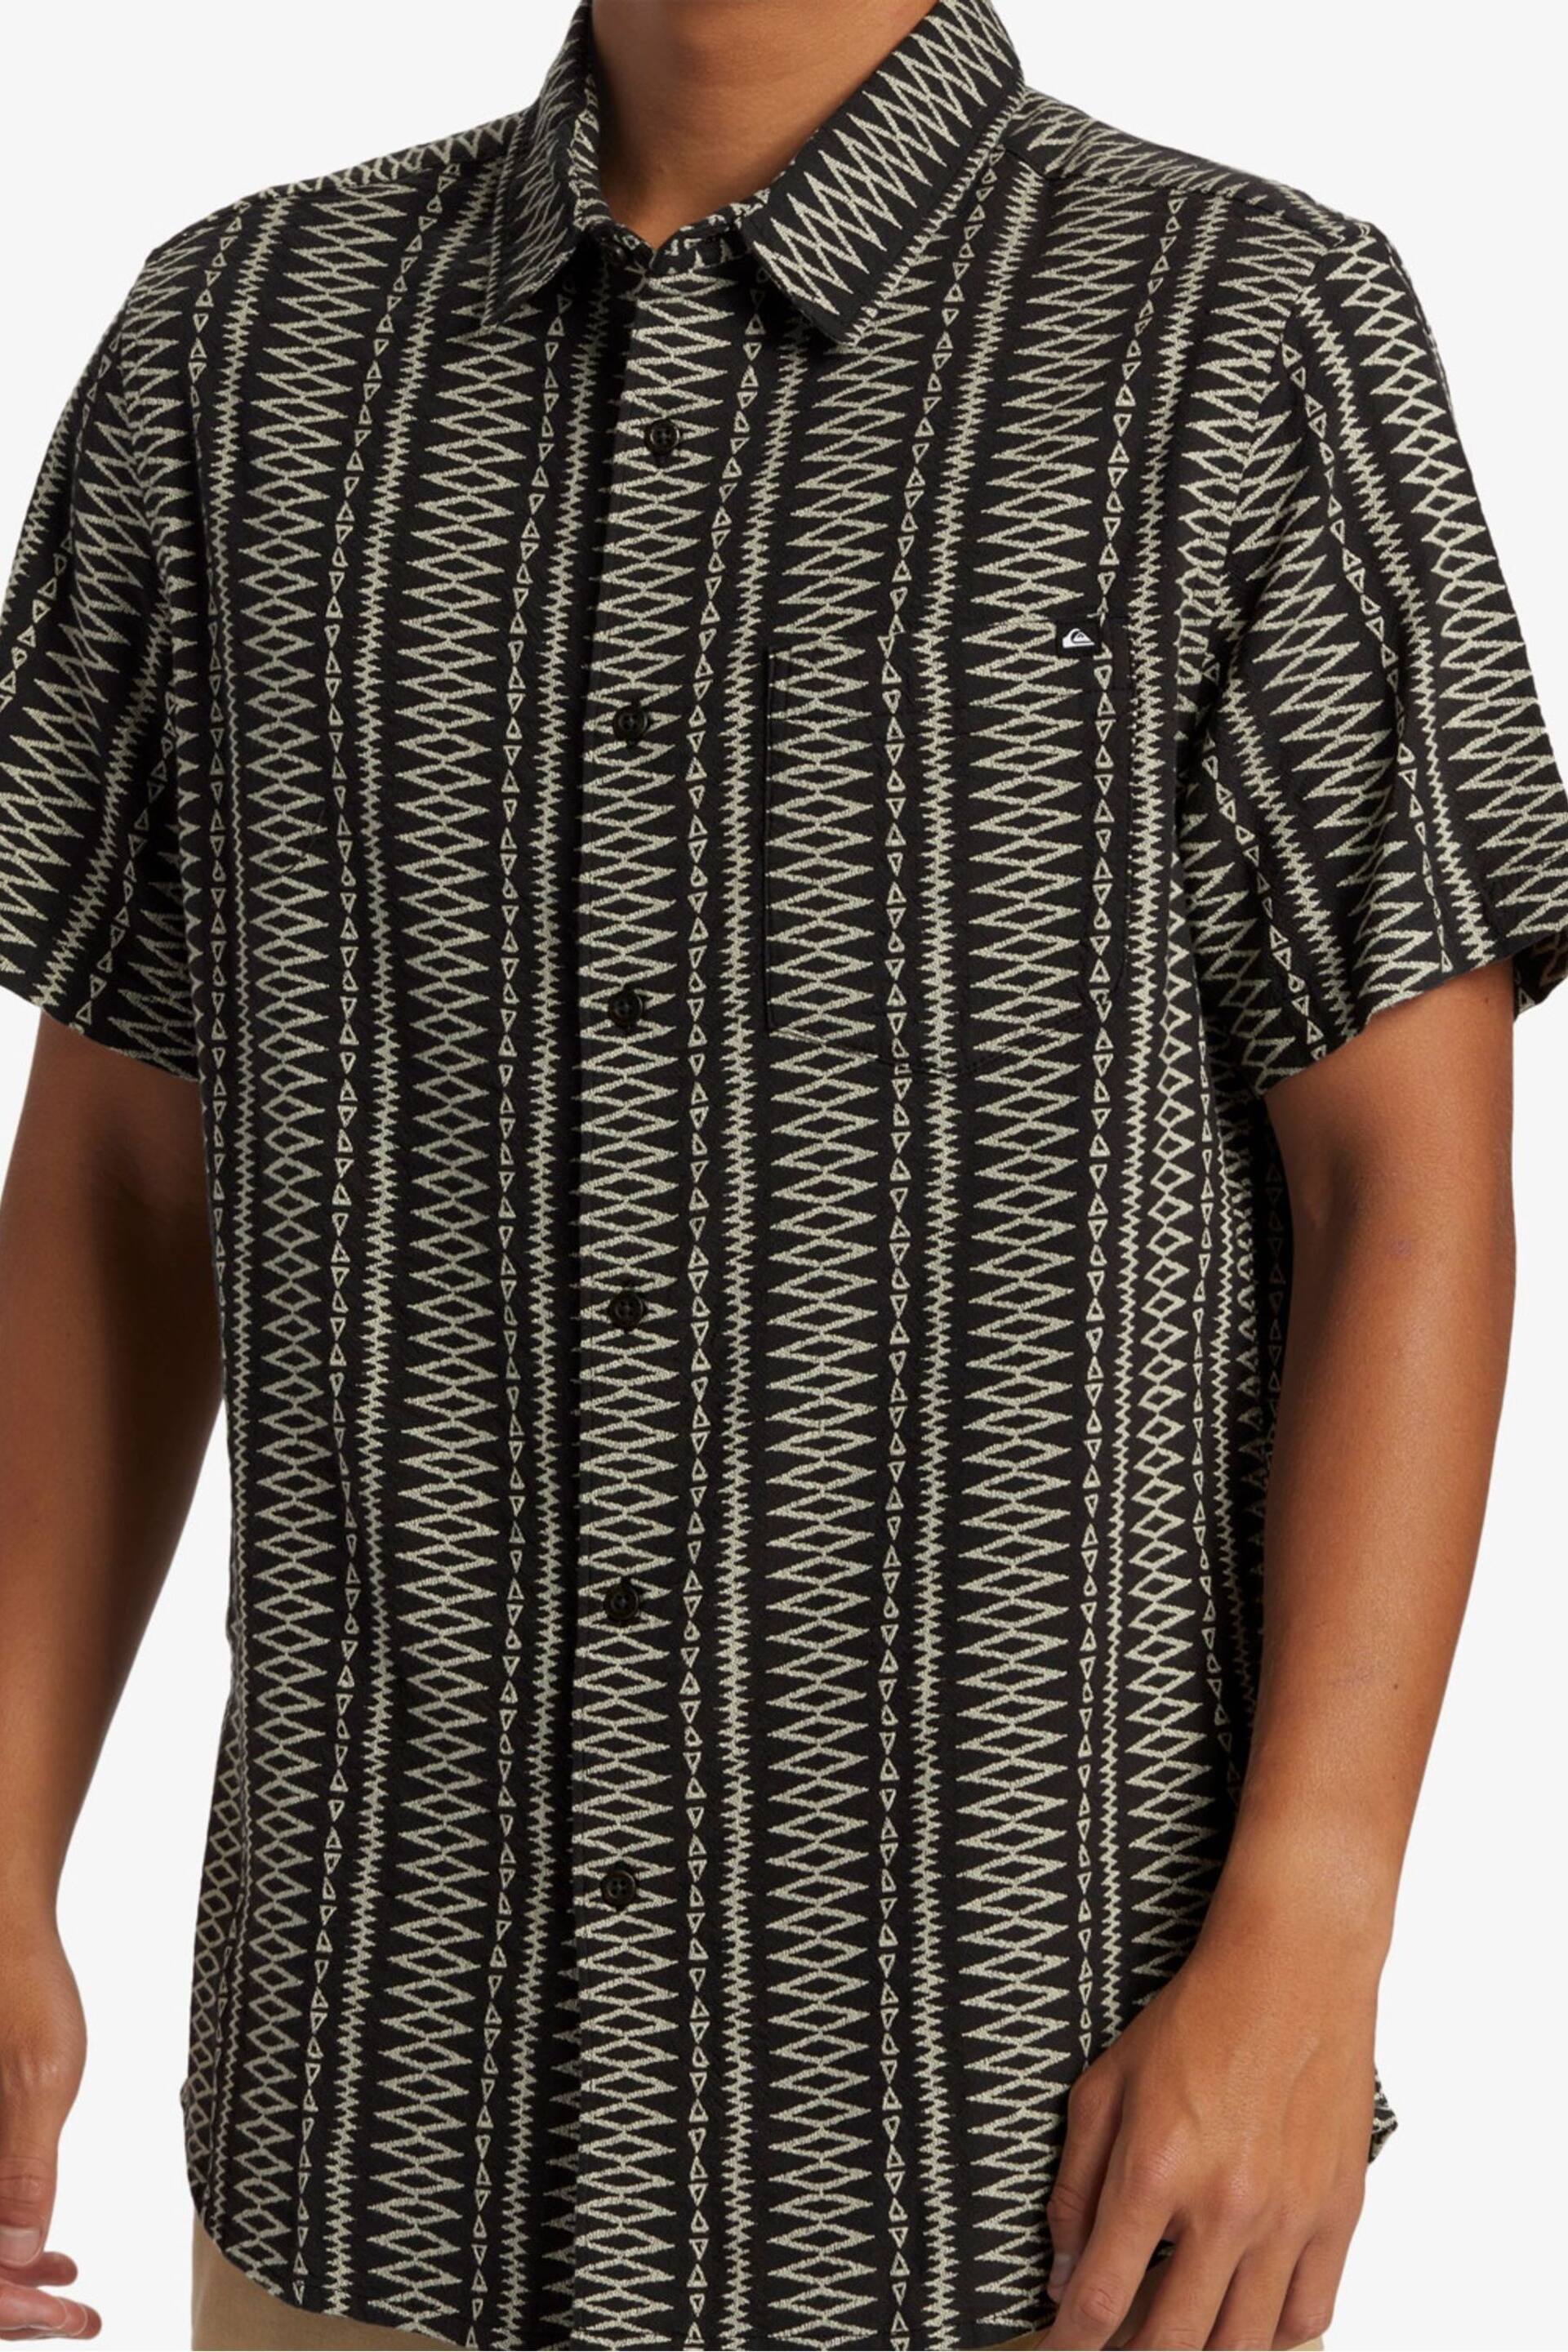 Quicksilver Vibrations Print Short Sleeve Shirt - Image 5 of 7